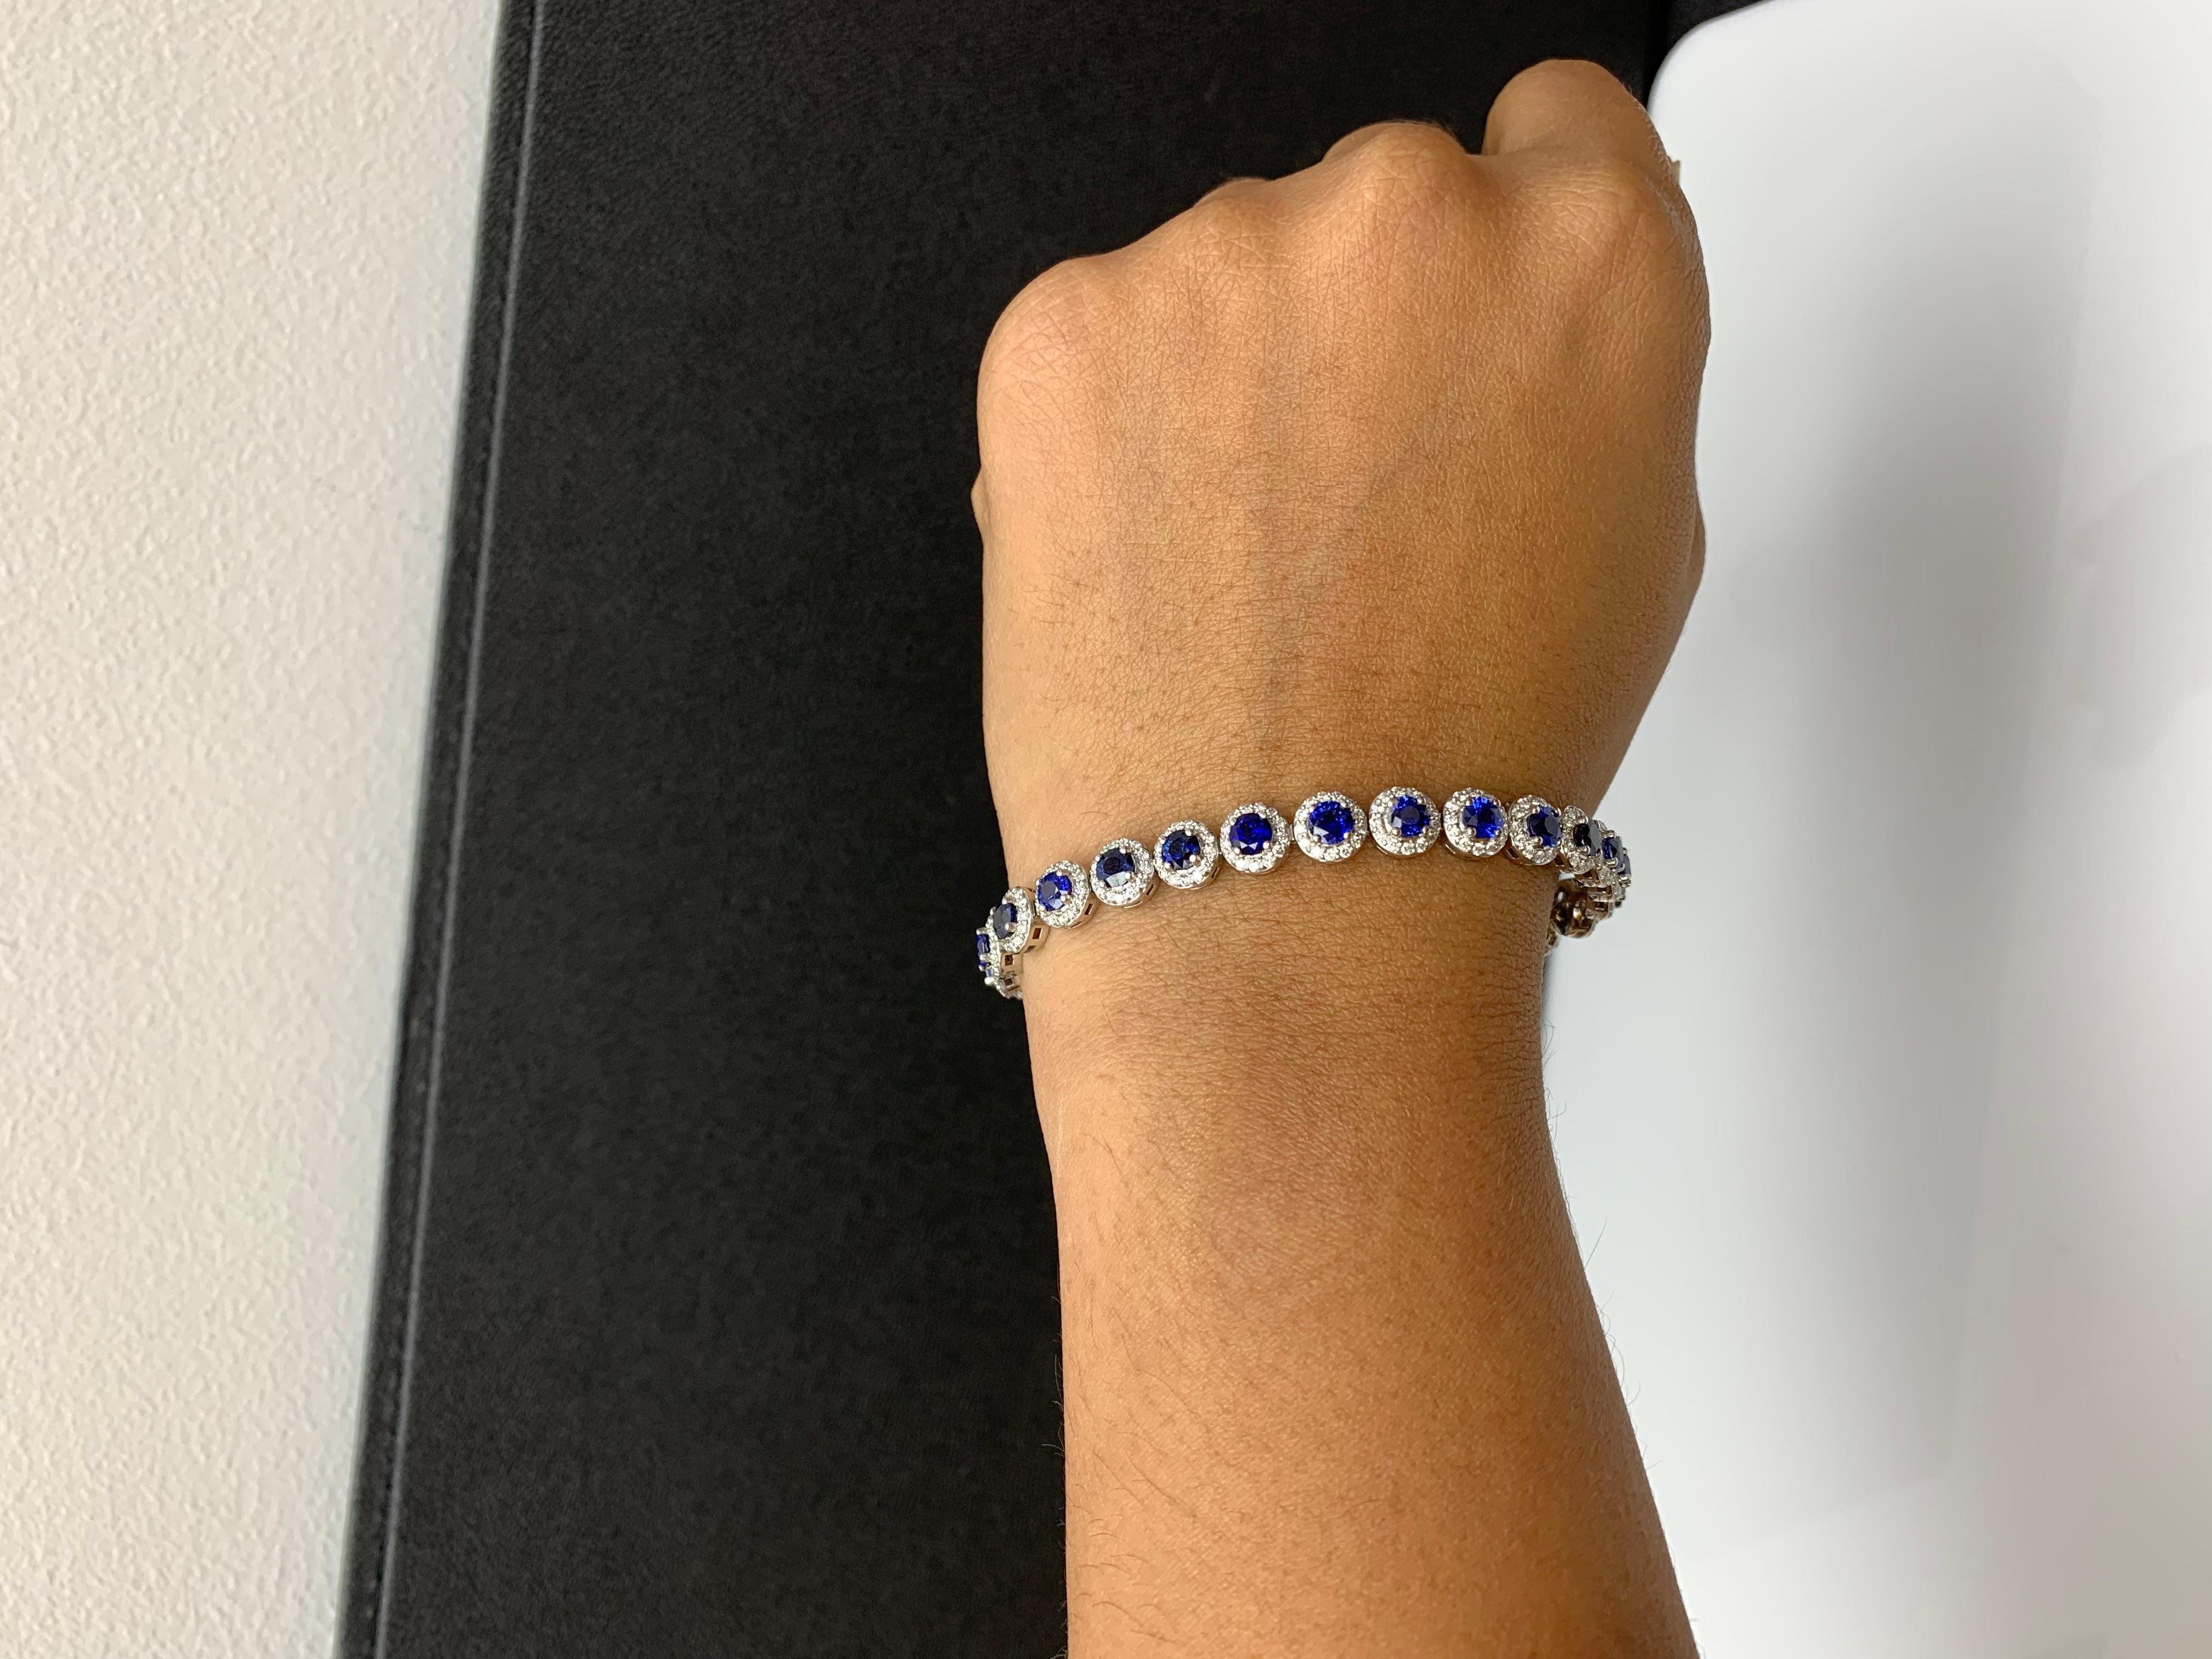 Women's 7.47 Carat Blue Sapphire and Diamond Halo Tennis Bracelet in 14k White Gold For Sale